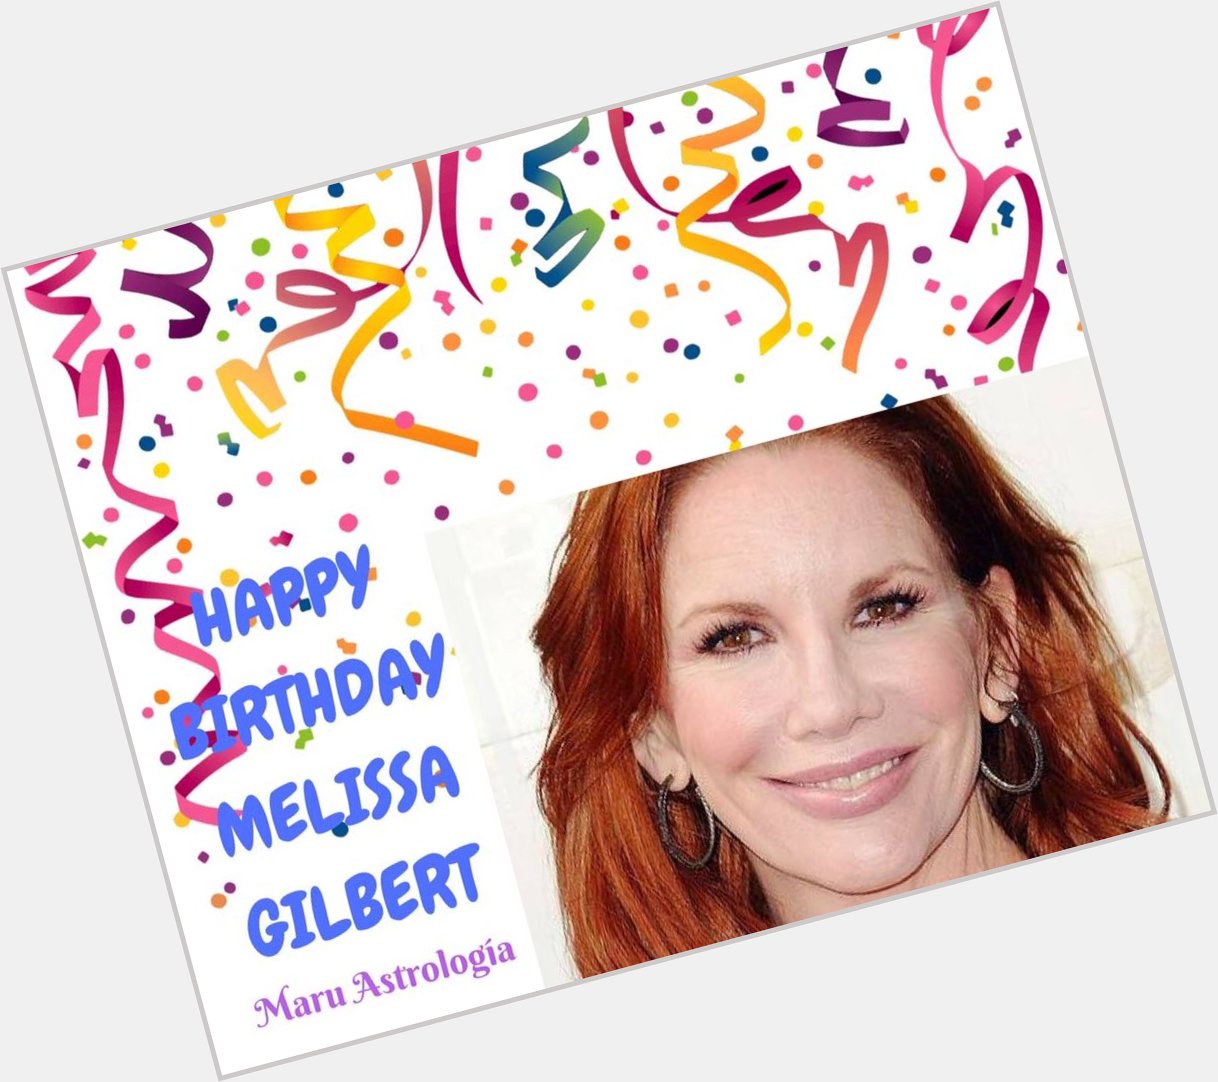 HAPPY BIRTHDAY MELISSA GILBERT!!!   